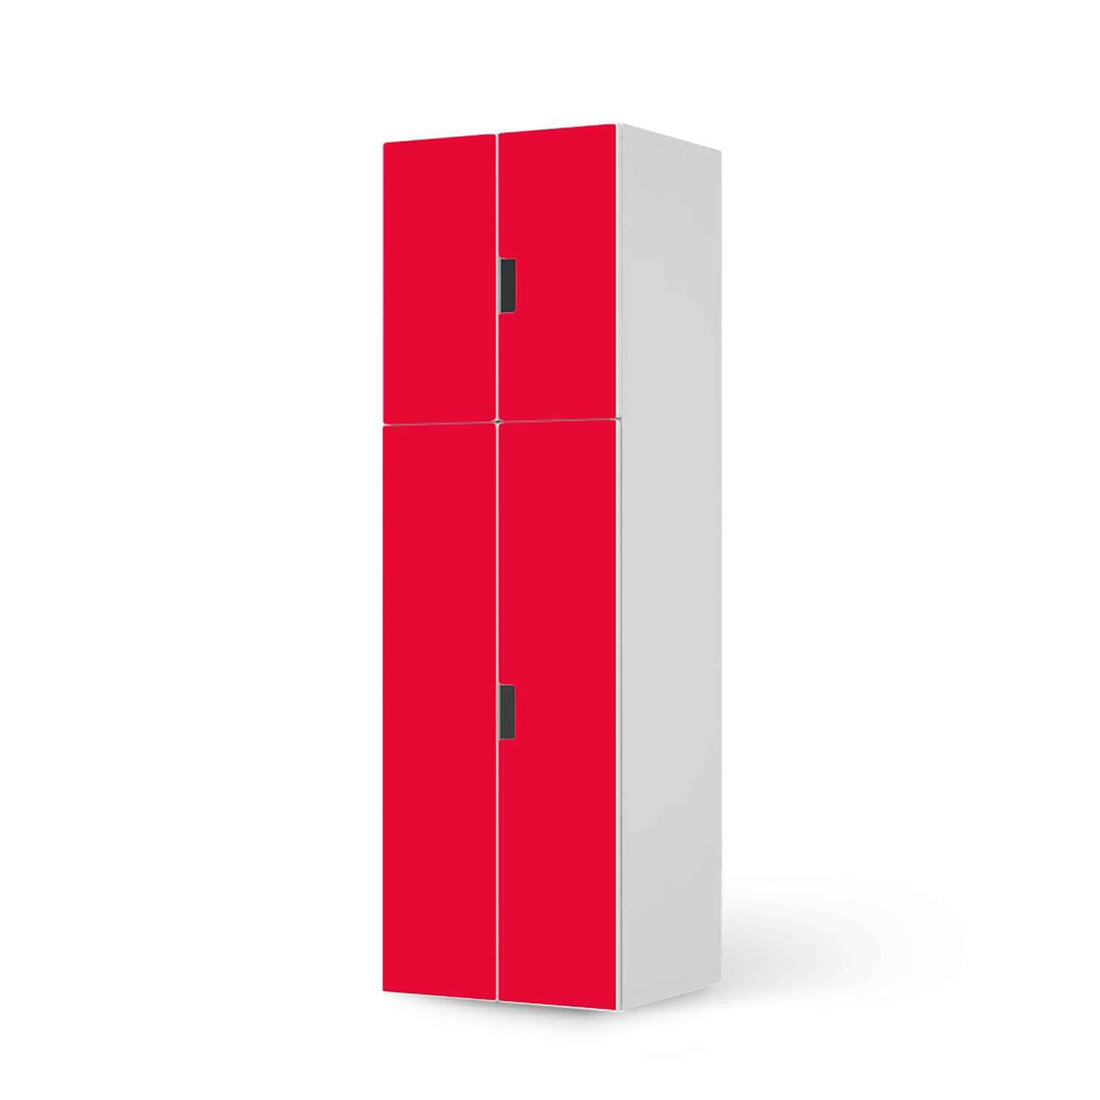 Selbstklebende Folie Rot Light - IKEA Stuva kombiniert - 2 große Türen und 2 kleine Türen (Kombination 2)  - weiss